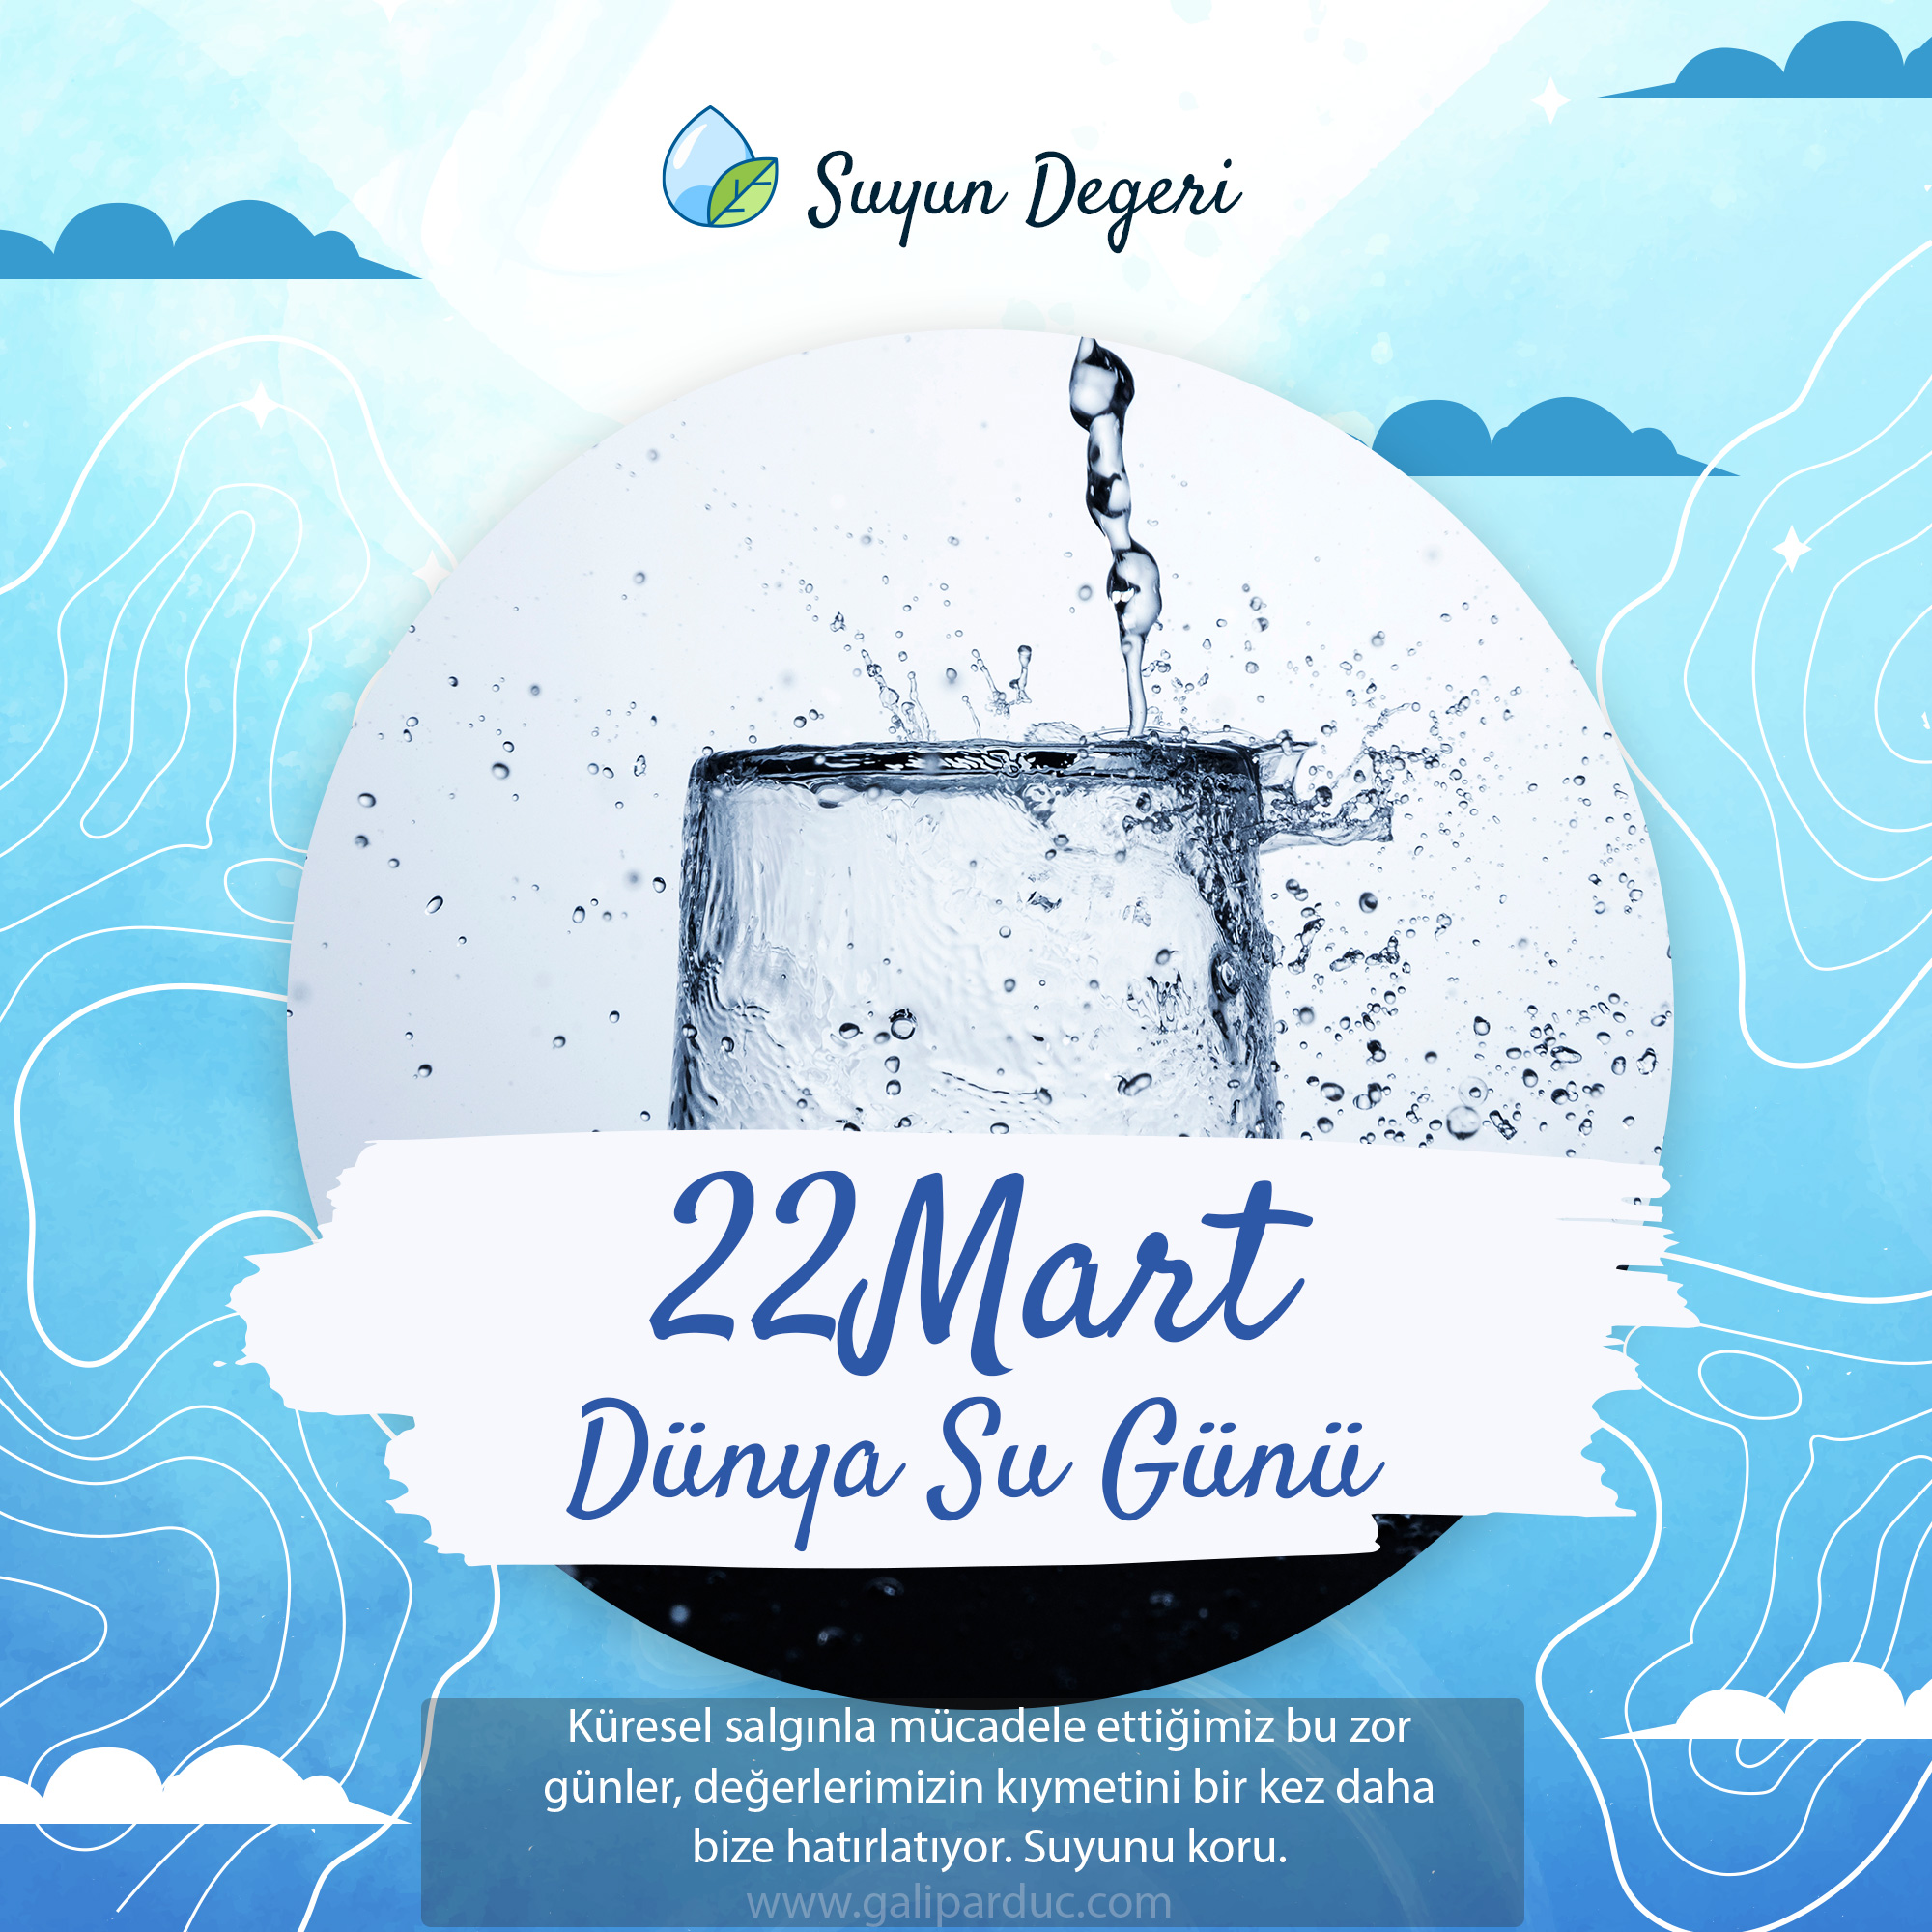 22 mart 2021 dünya su günü kutlamaları